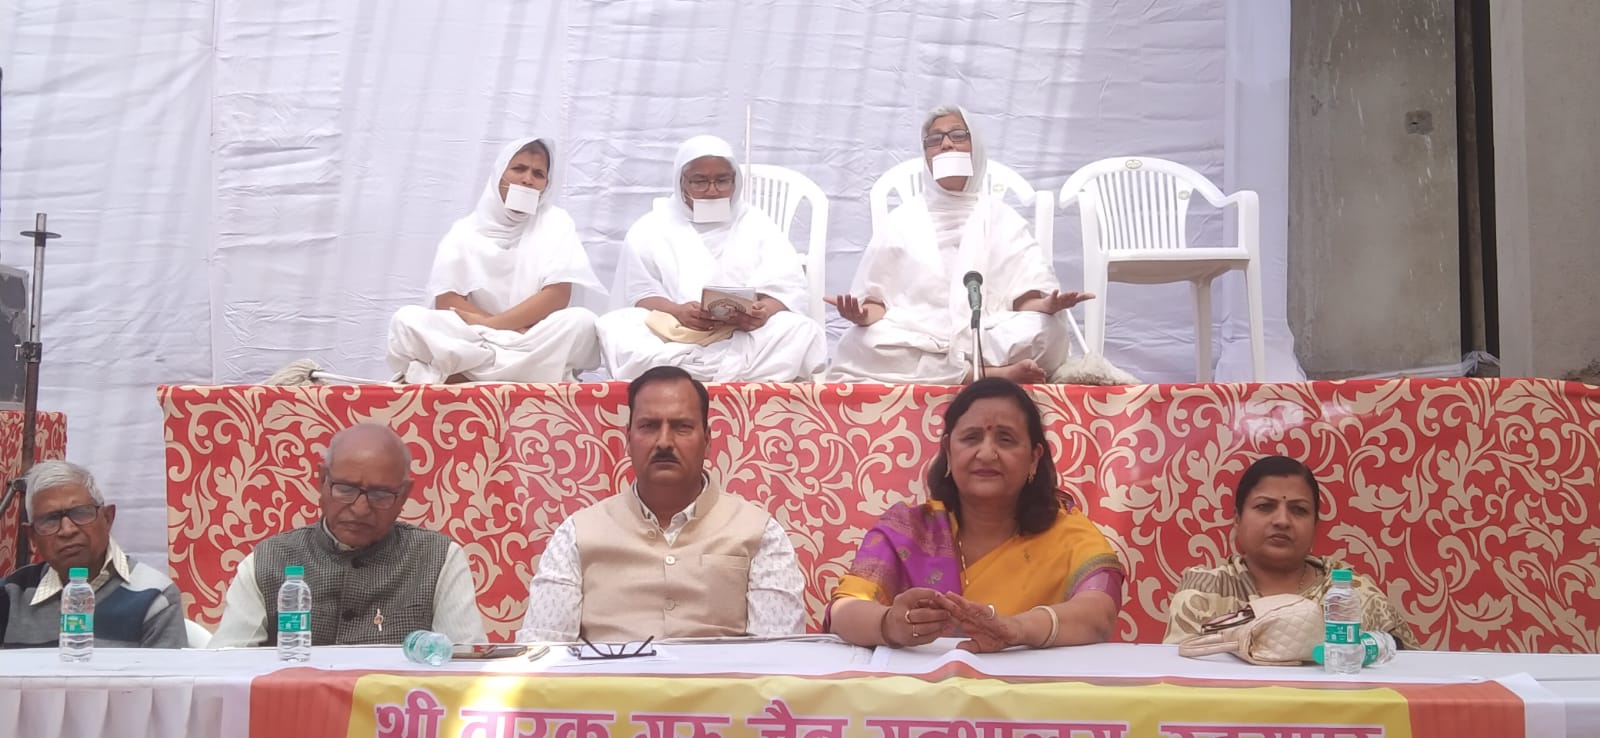 Jain Saints Centennial Celebration Event